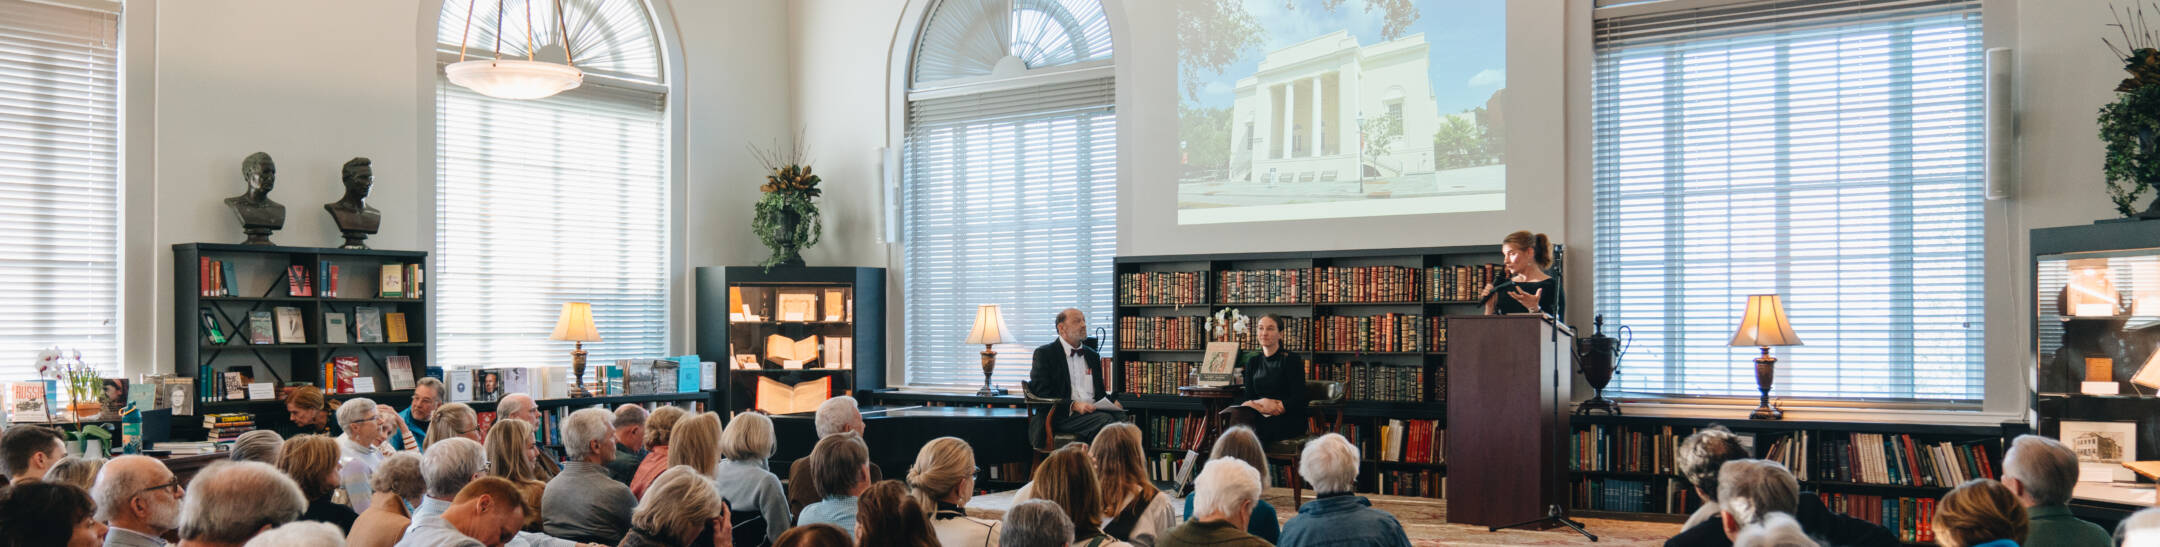 Charleston library society documentary series